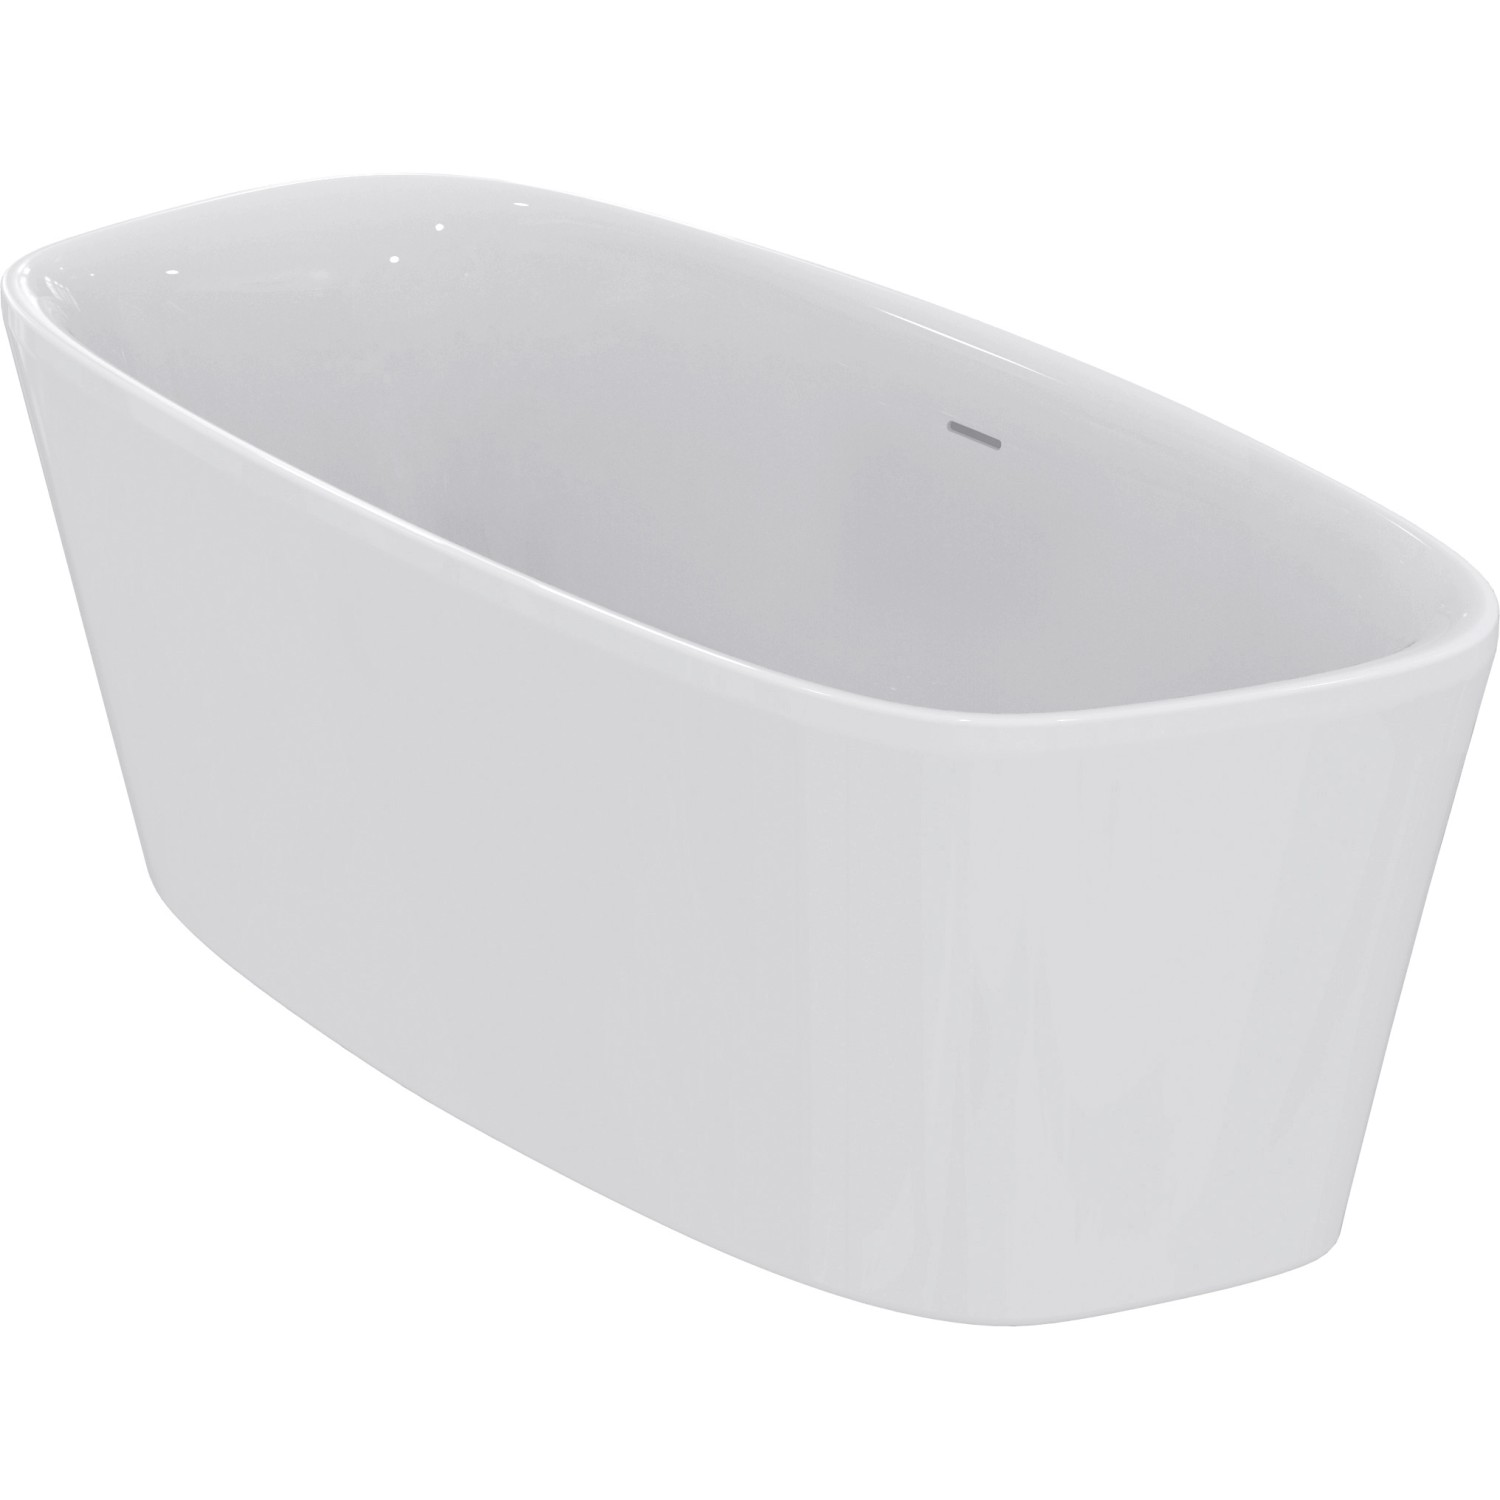 Ideal Standard Oval-Badewanne Dea freistehend 180 cm x 80 cm Weiß